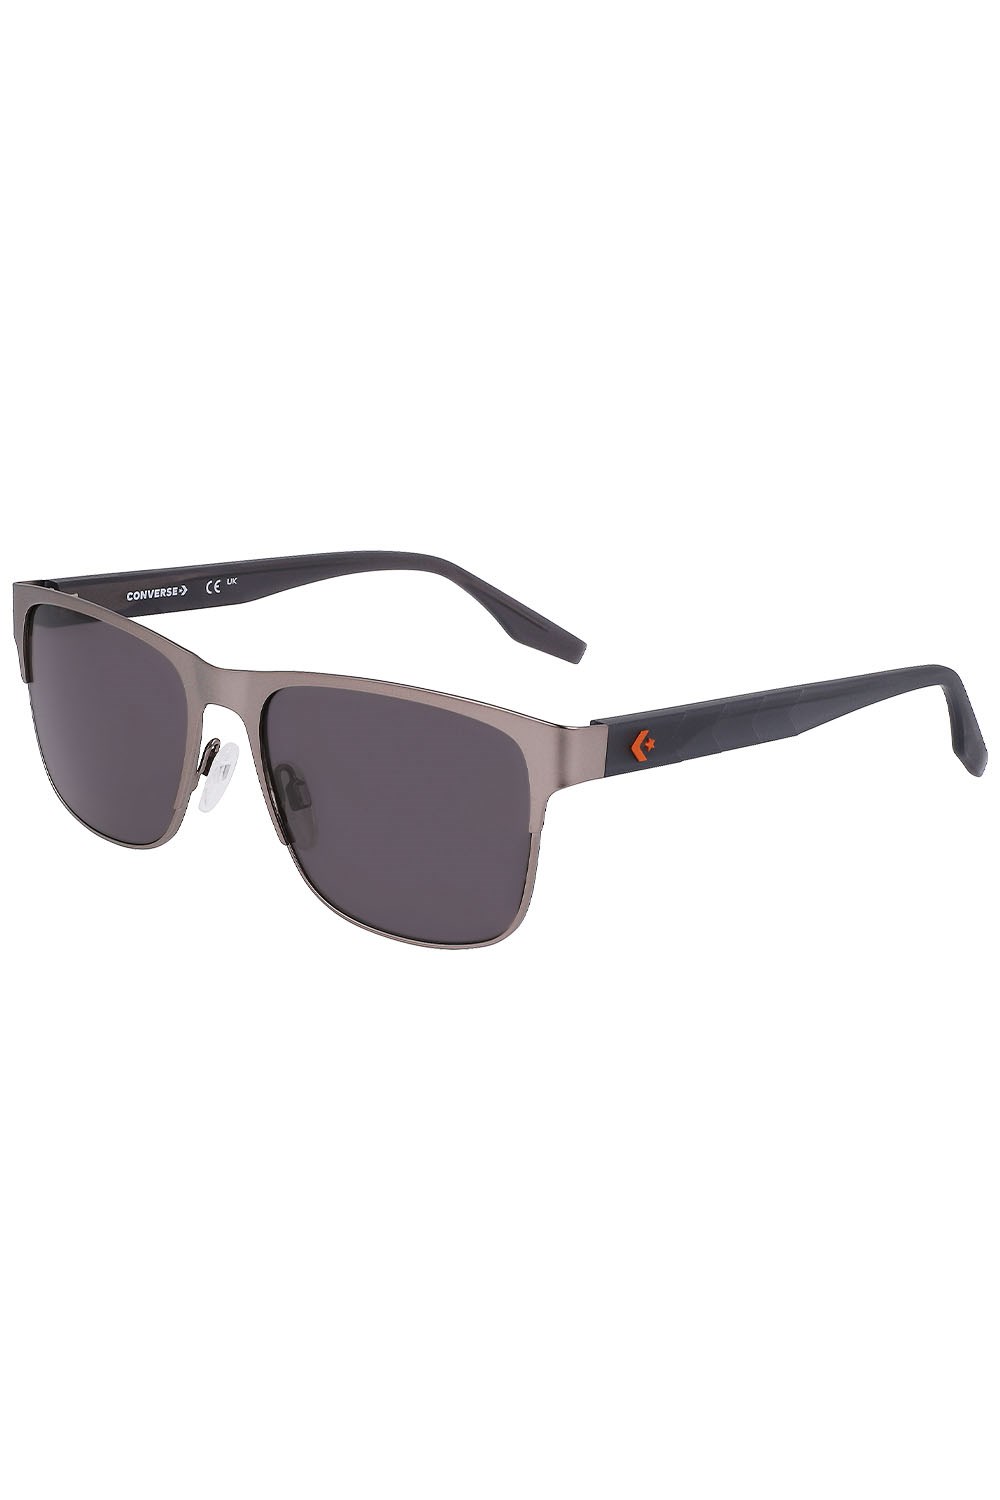 Advance Unisex Sunglasses -